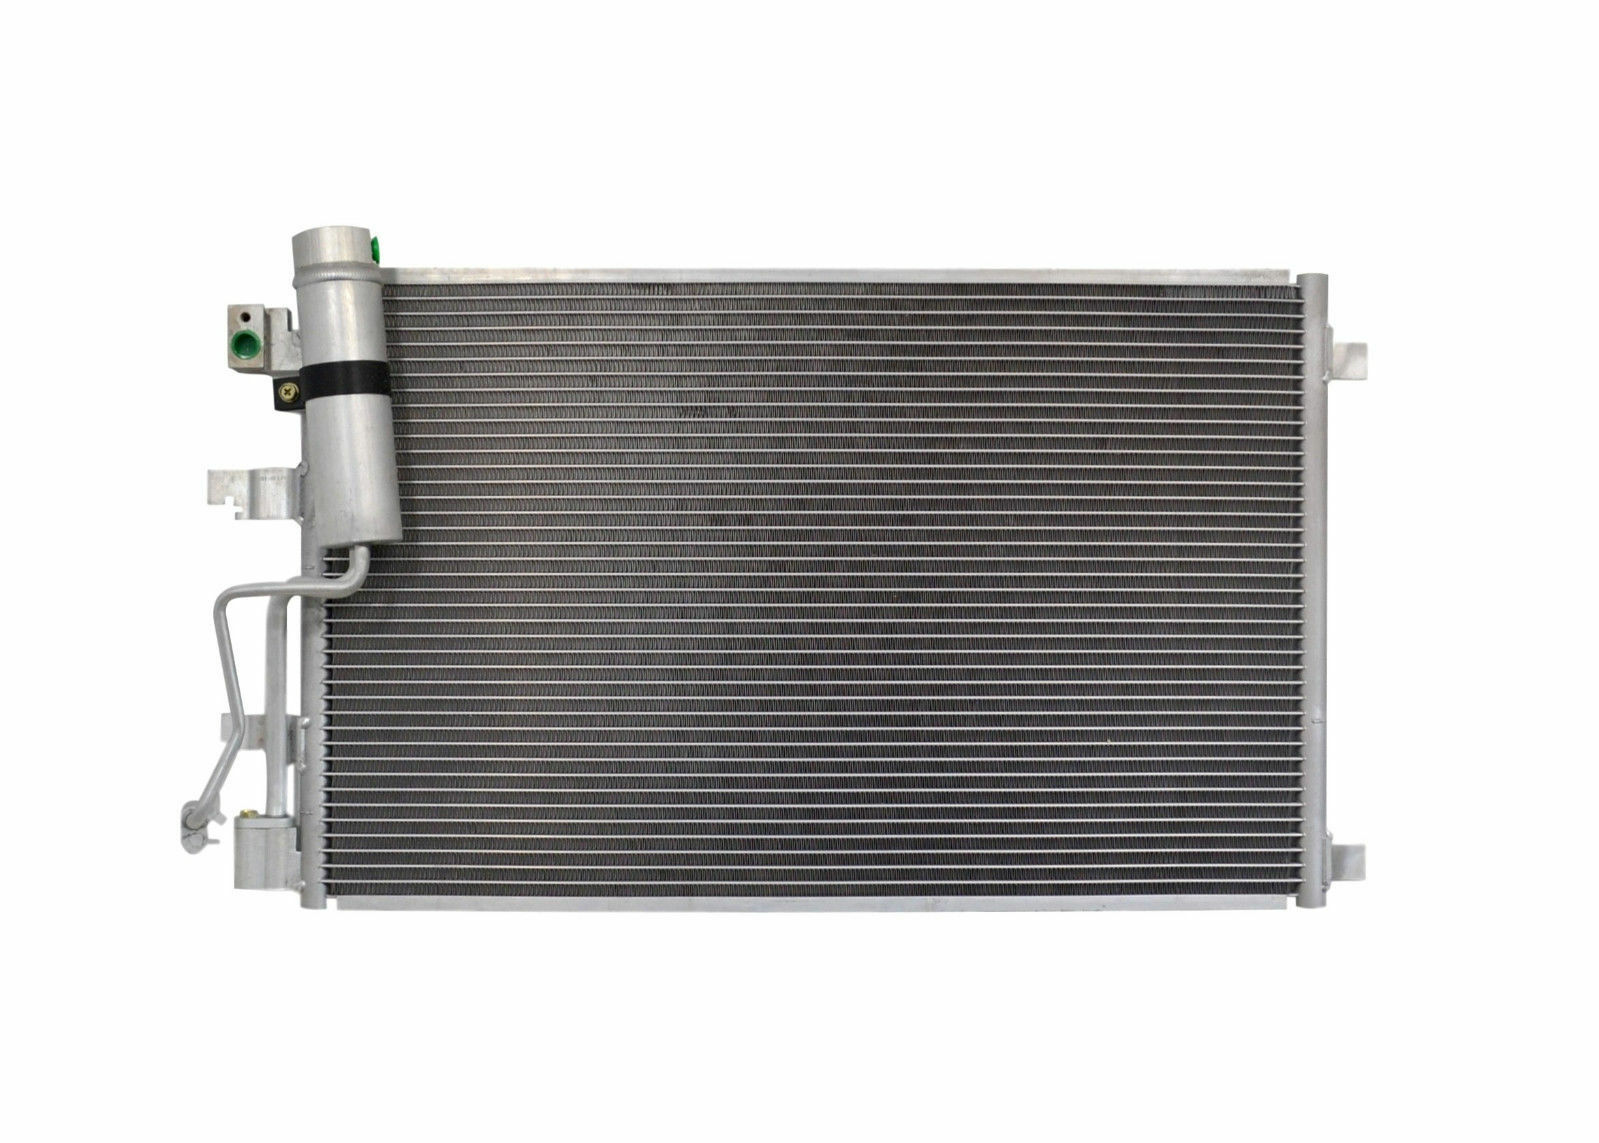 Condensator climatizare Nissan Qashqai/Qashqai +2 (J10), 02.2007-04.2014, motor 2.0 dci, 110 kw diesel, cutie manuala/automata, full aluminiu brazat, 645(595)x400(385)x16 mm, cu uscator filtrat